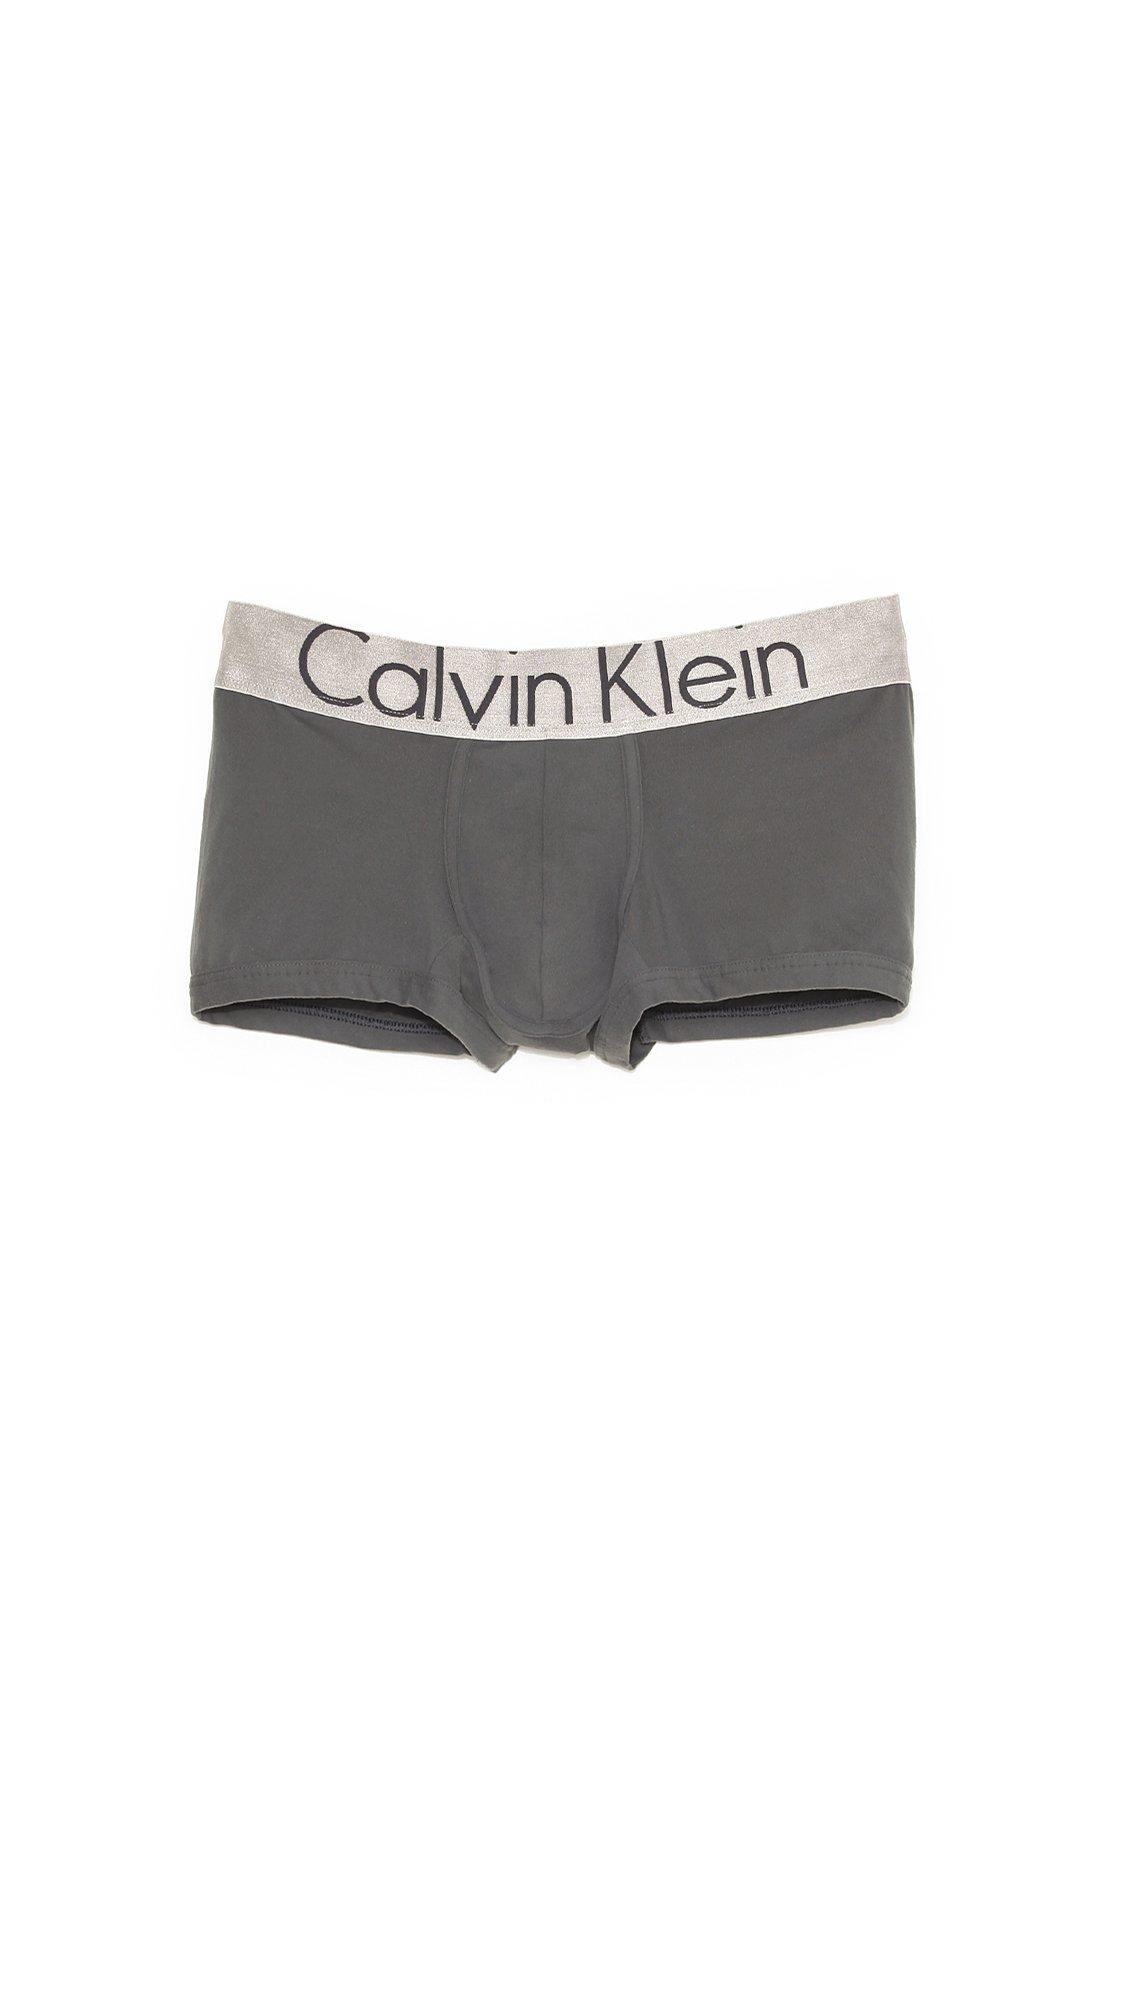 Calvin Klein Underwear Steel Micro Low Rise Trunks in Mink (Gray) for